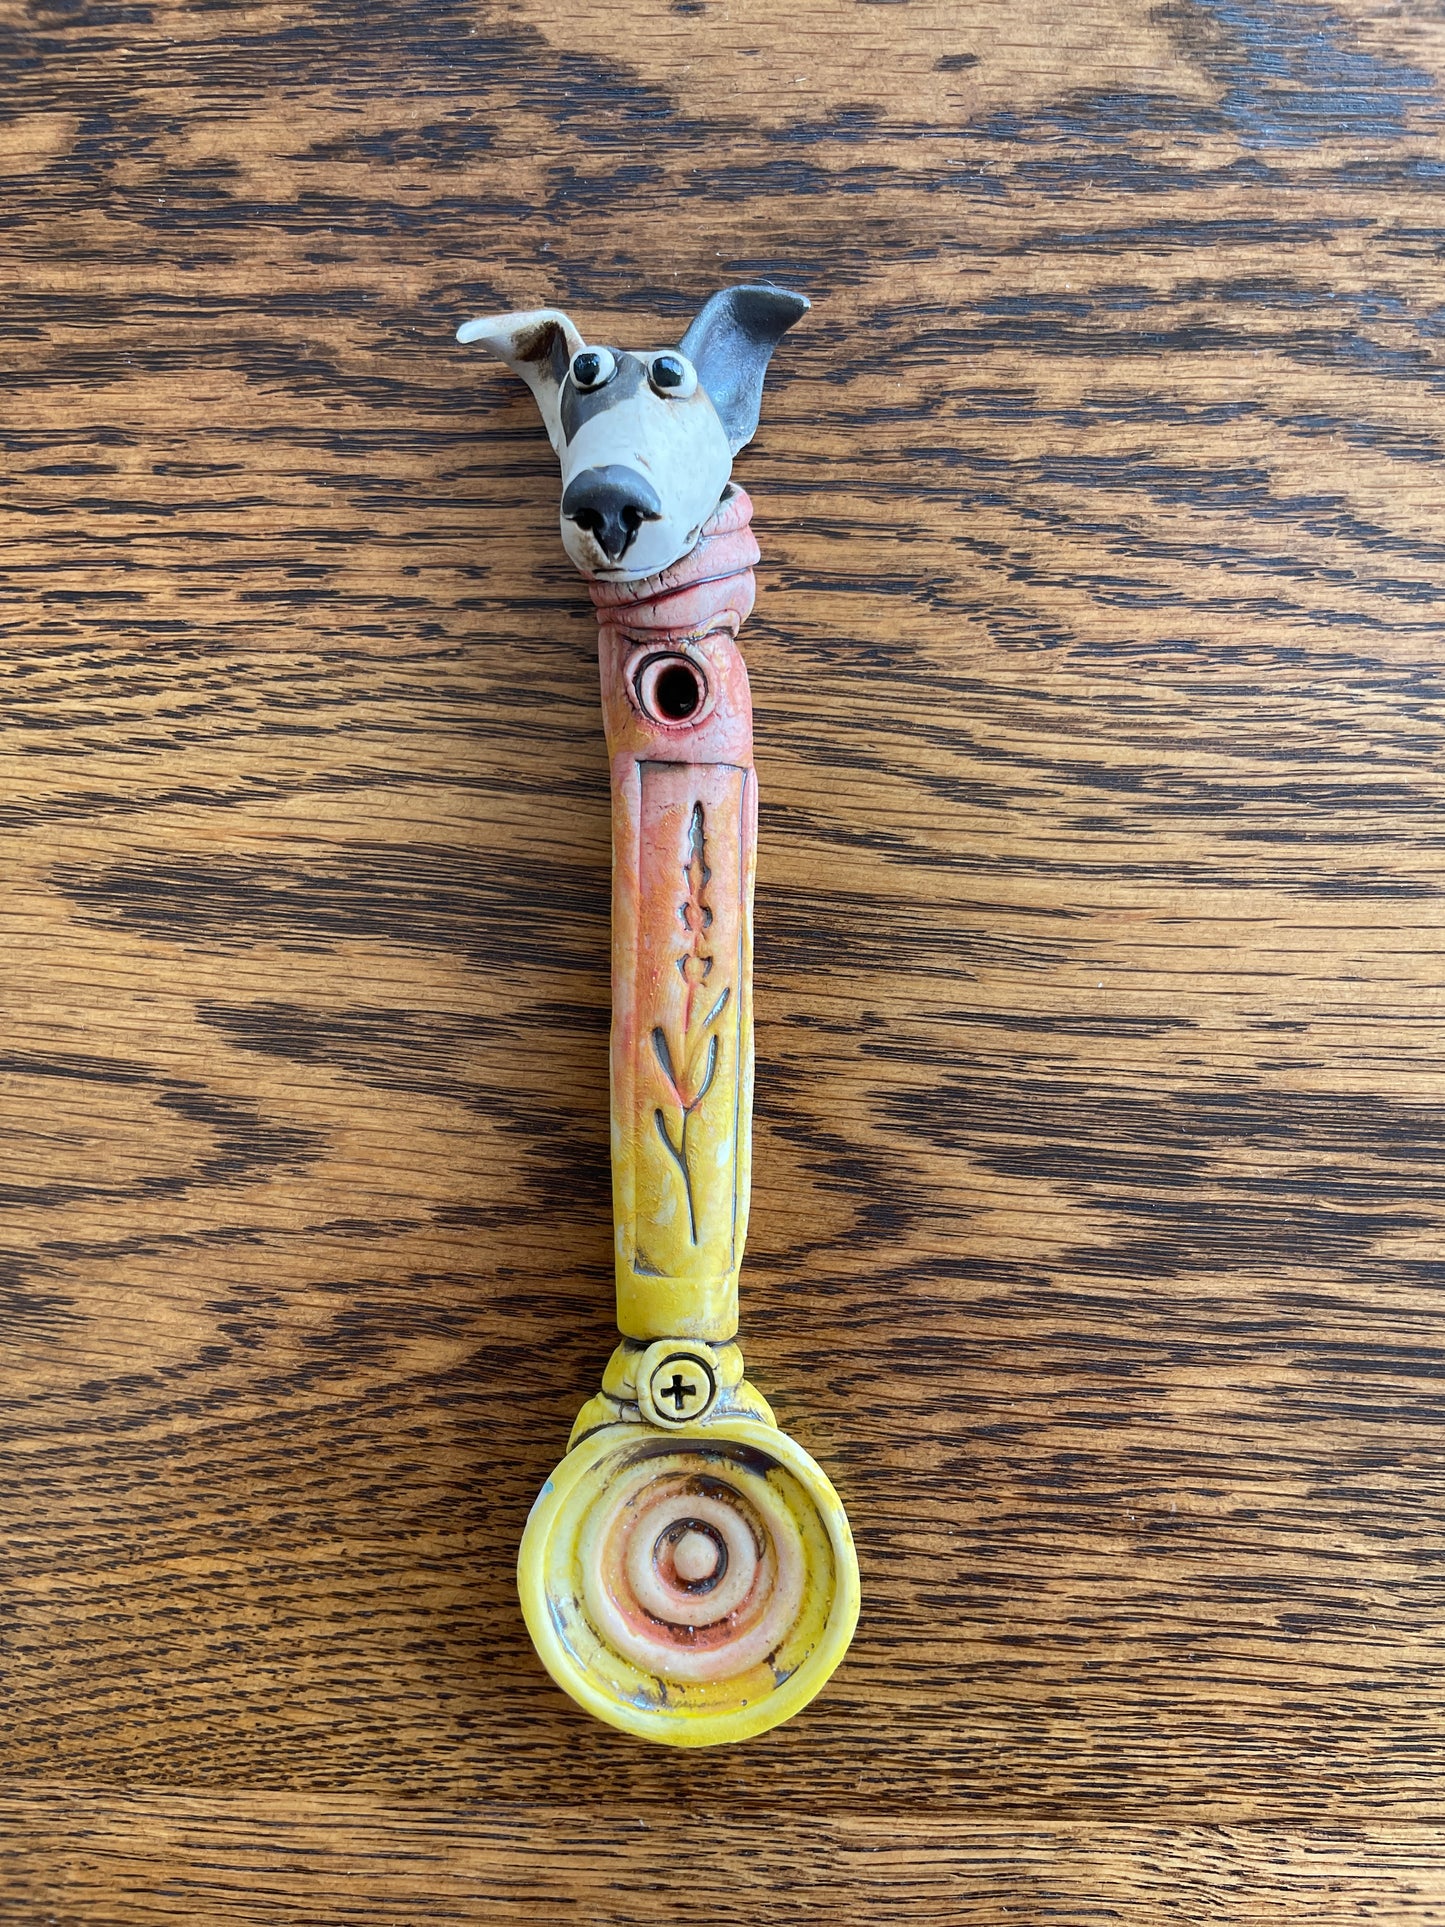 Fiona Tunnicliffe Decorative Spoon - terrier plus spiral